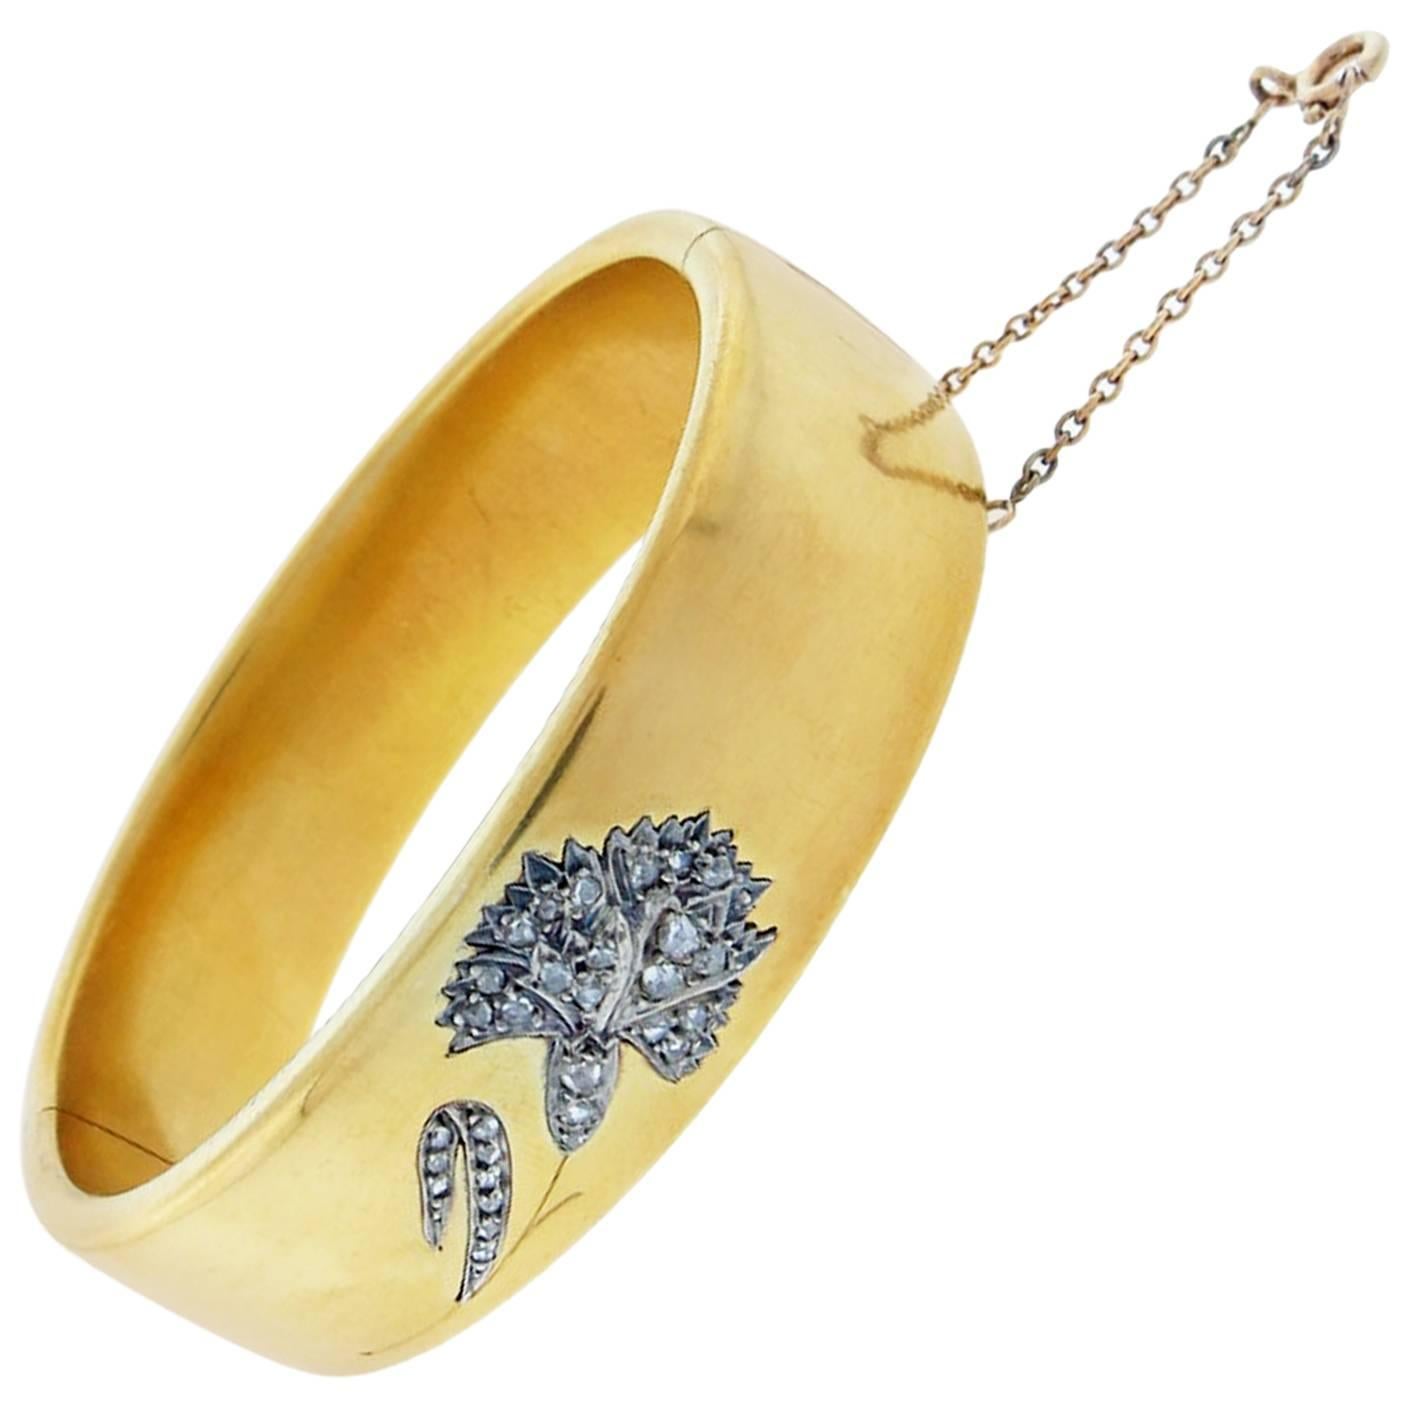  Elegant French Rose Cut Diamond Gold Carnation Bracelet